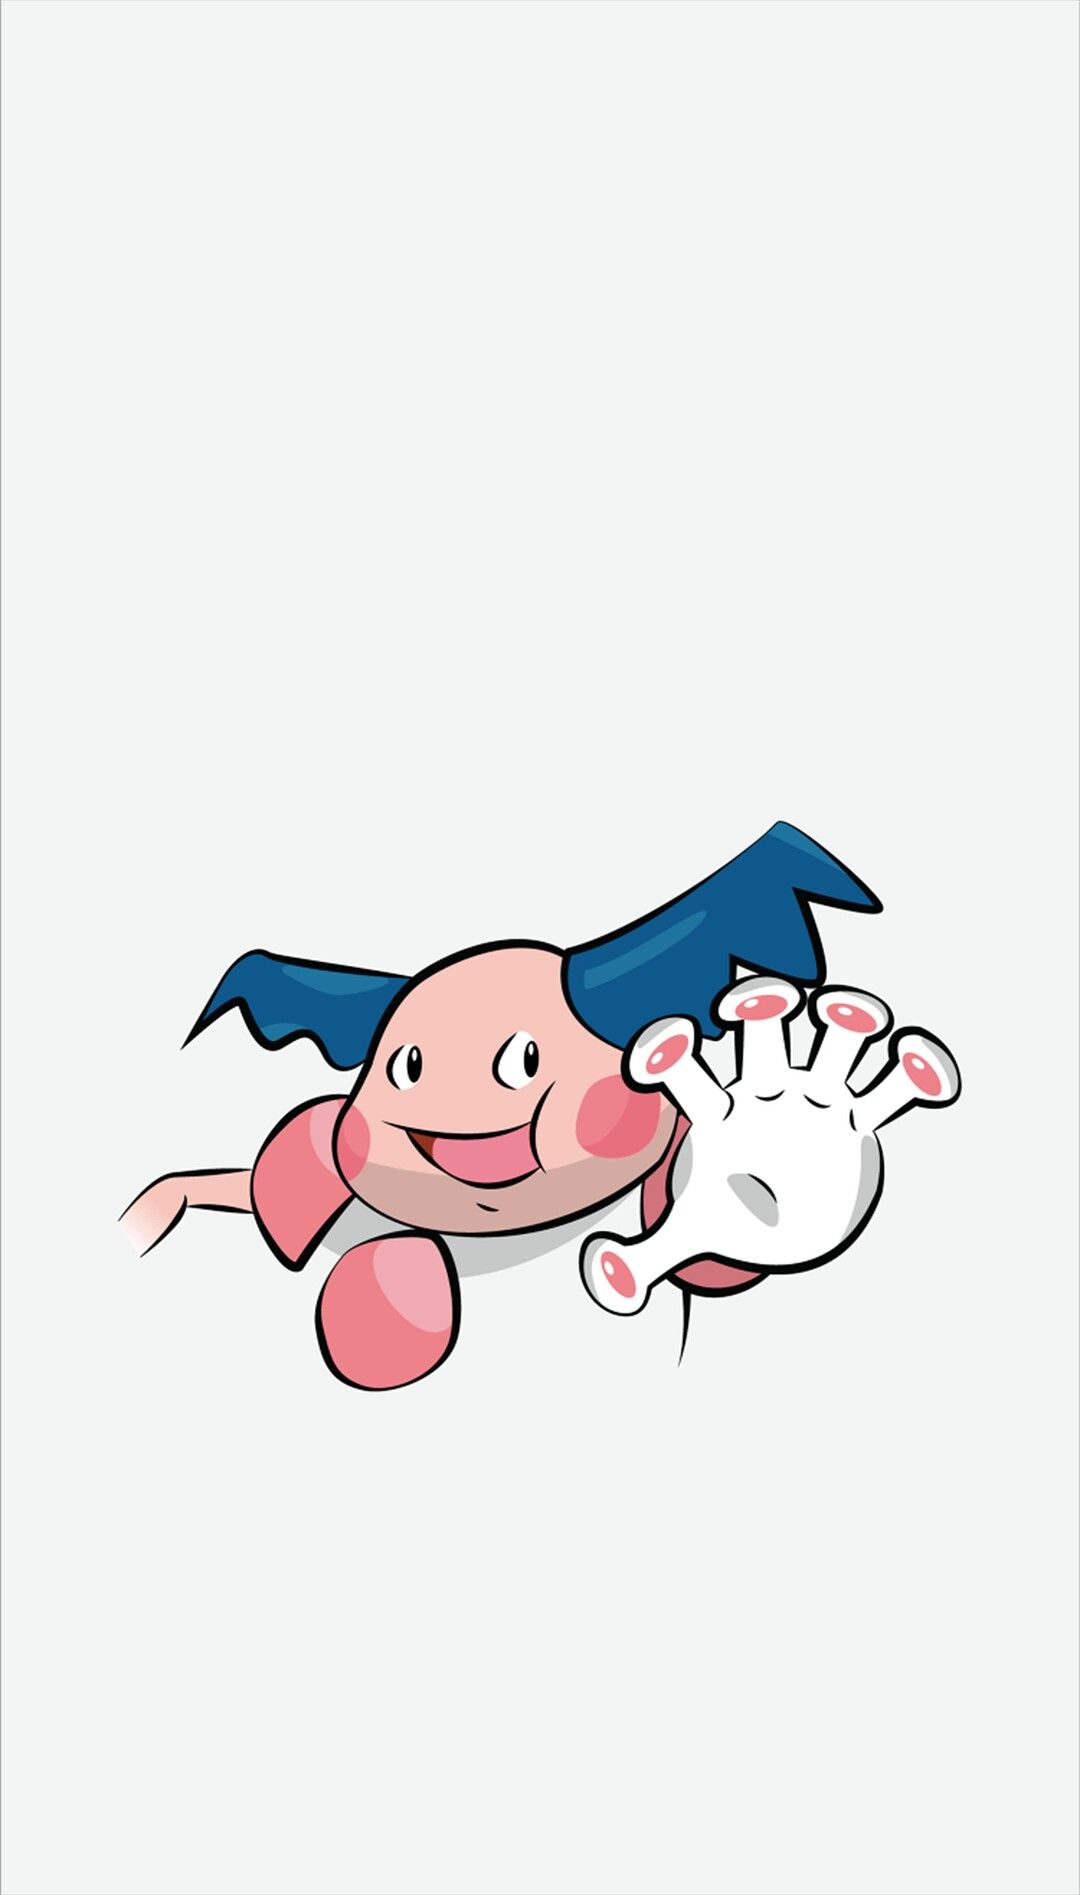 Mr. Mime wallpaper | Got to catch them all | Pinterest | Pokémon …